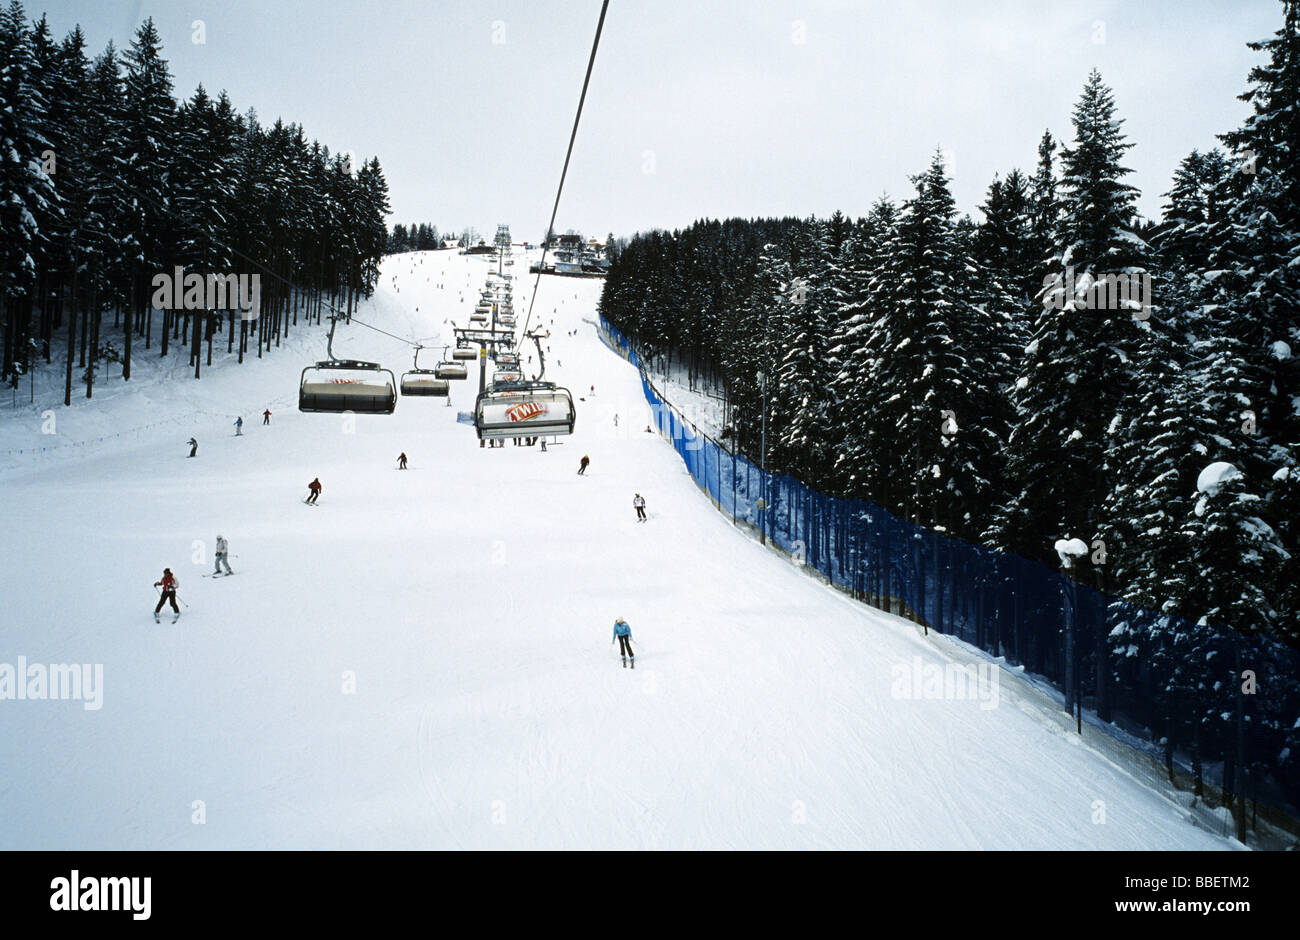 Zakopane Gubalowka Polana Szymoszkowa ski lift skiers Stock Photo